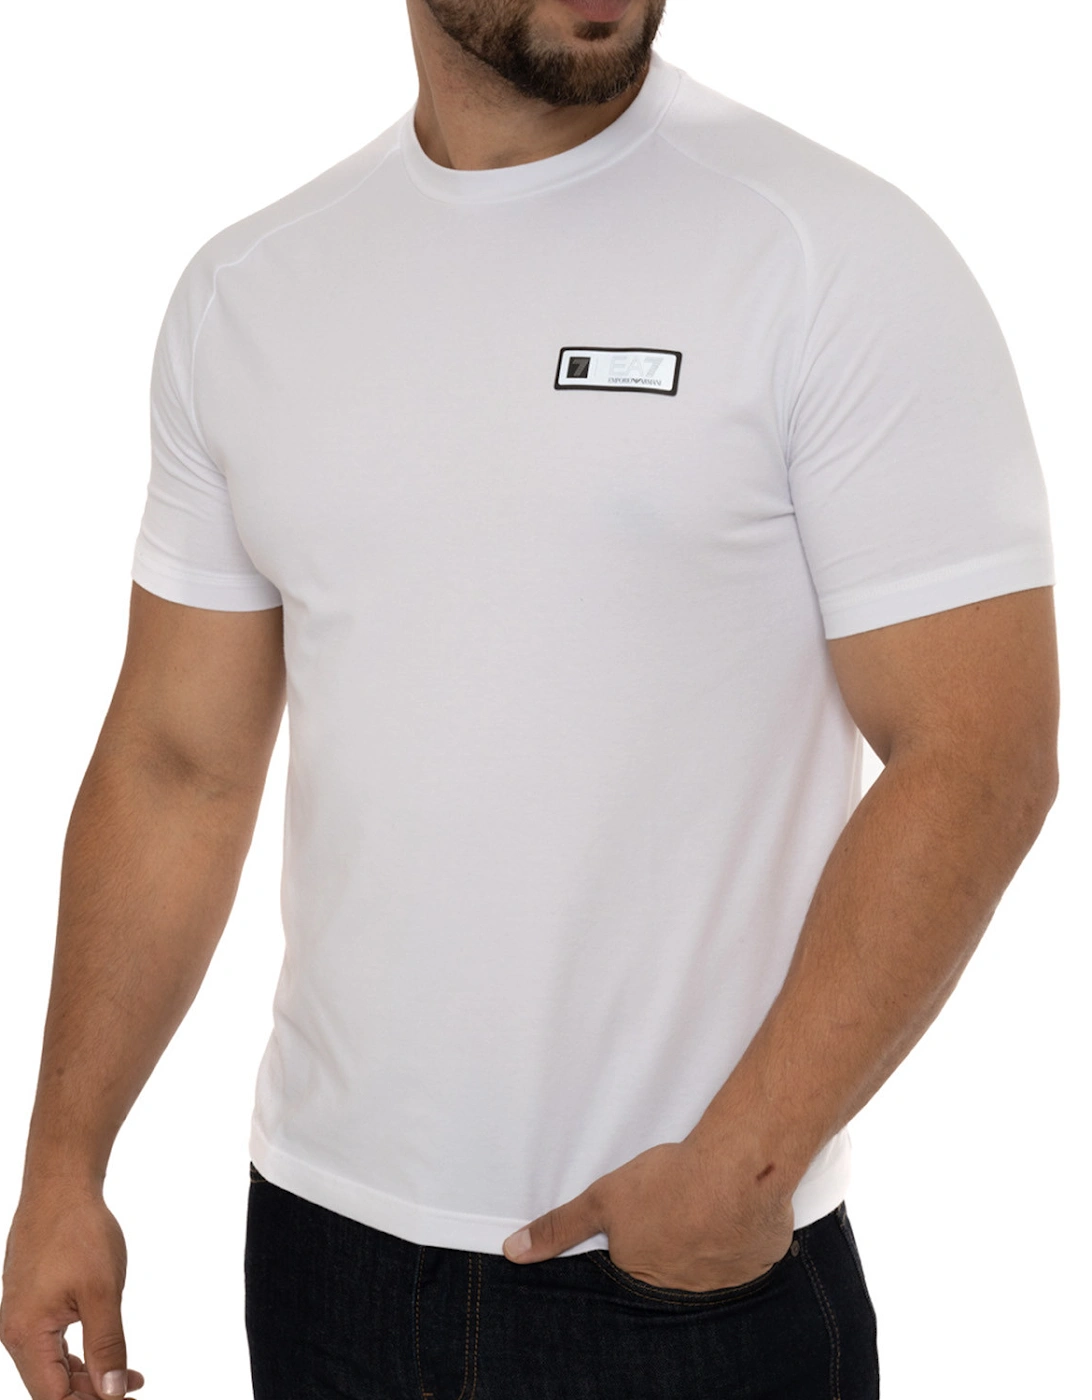 Mens Ventus 7 Reflective Badge T-Shirt (White)